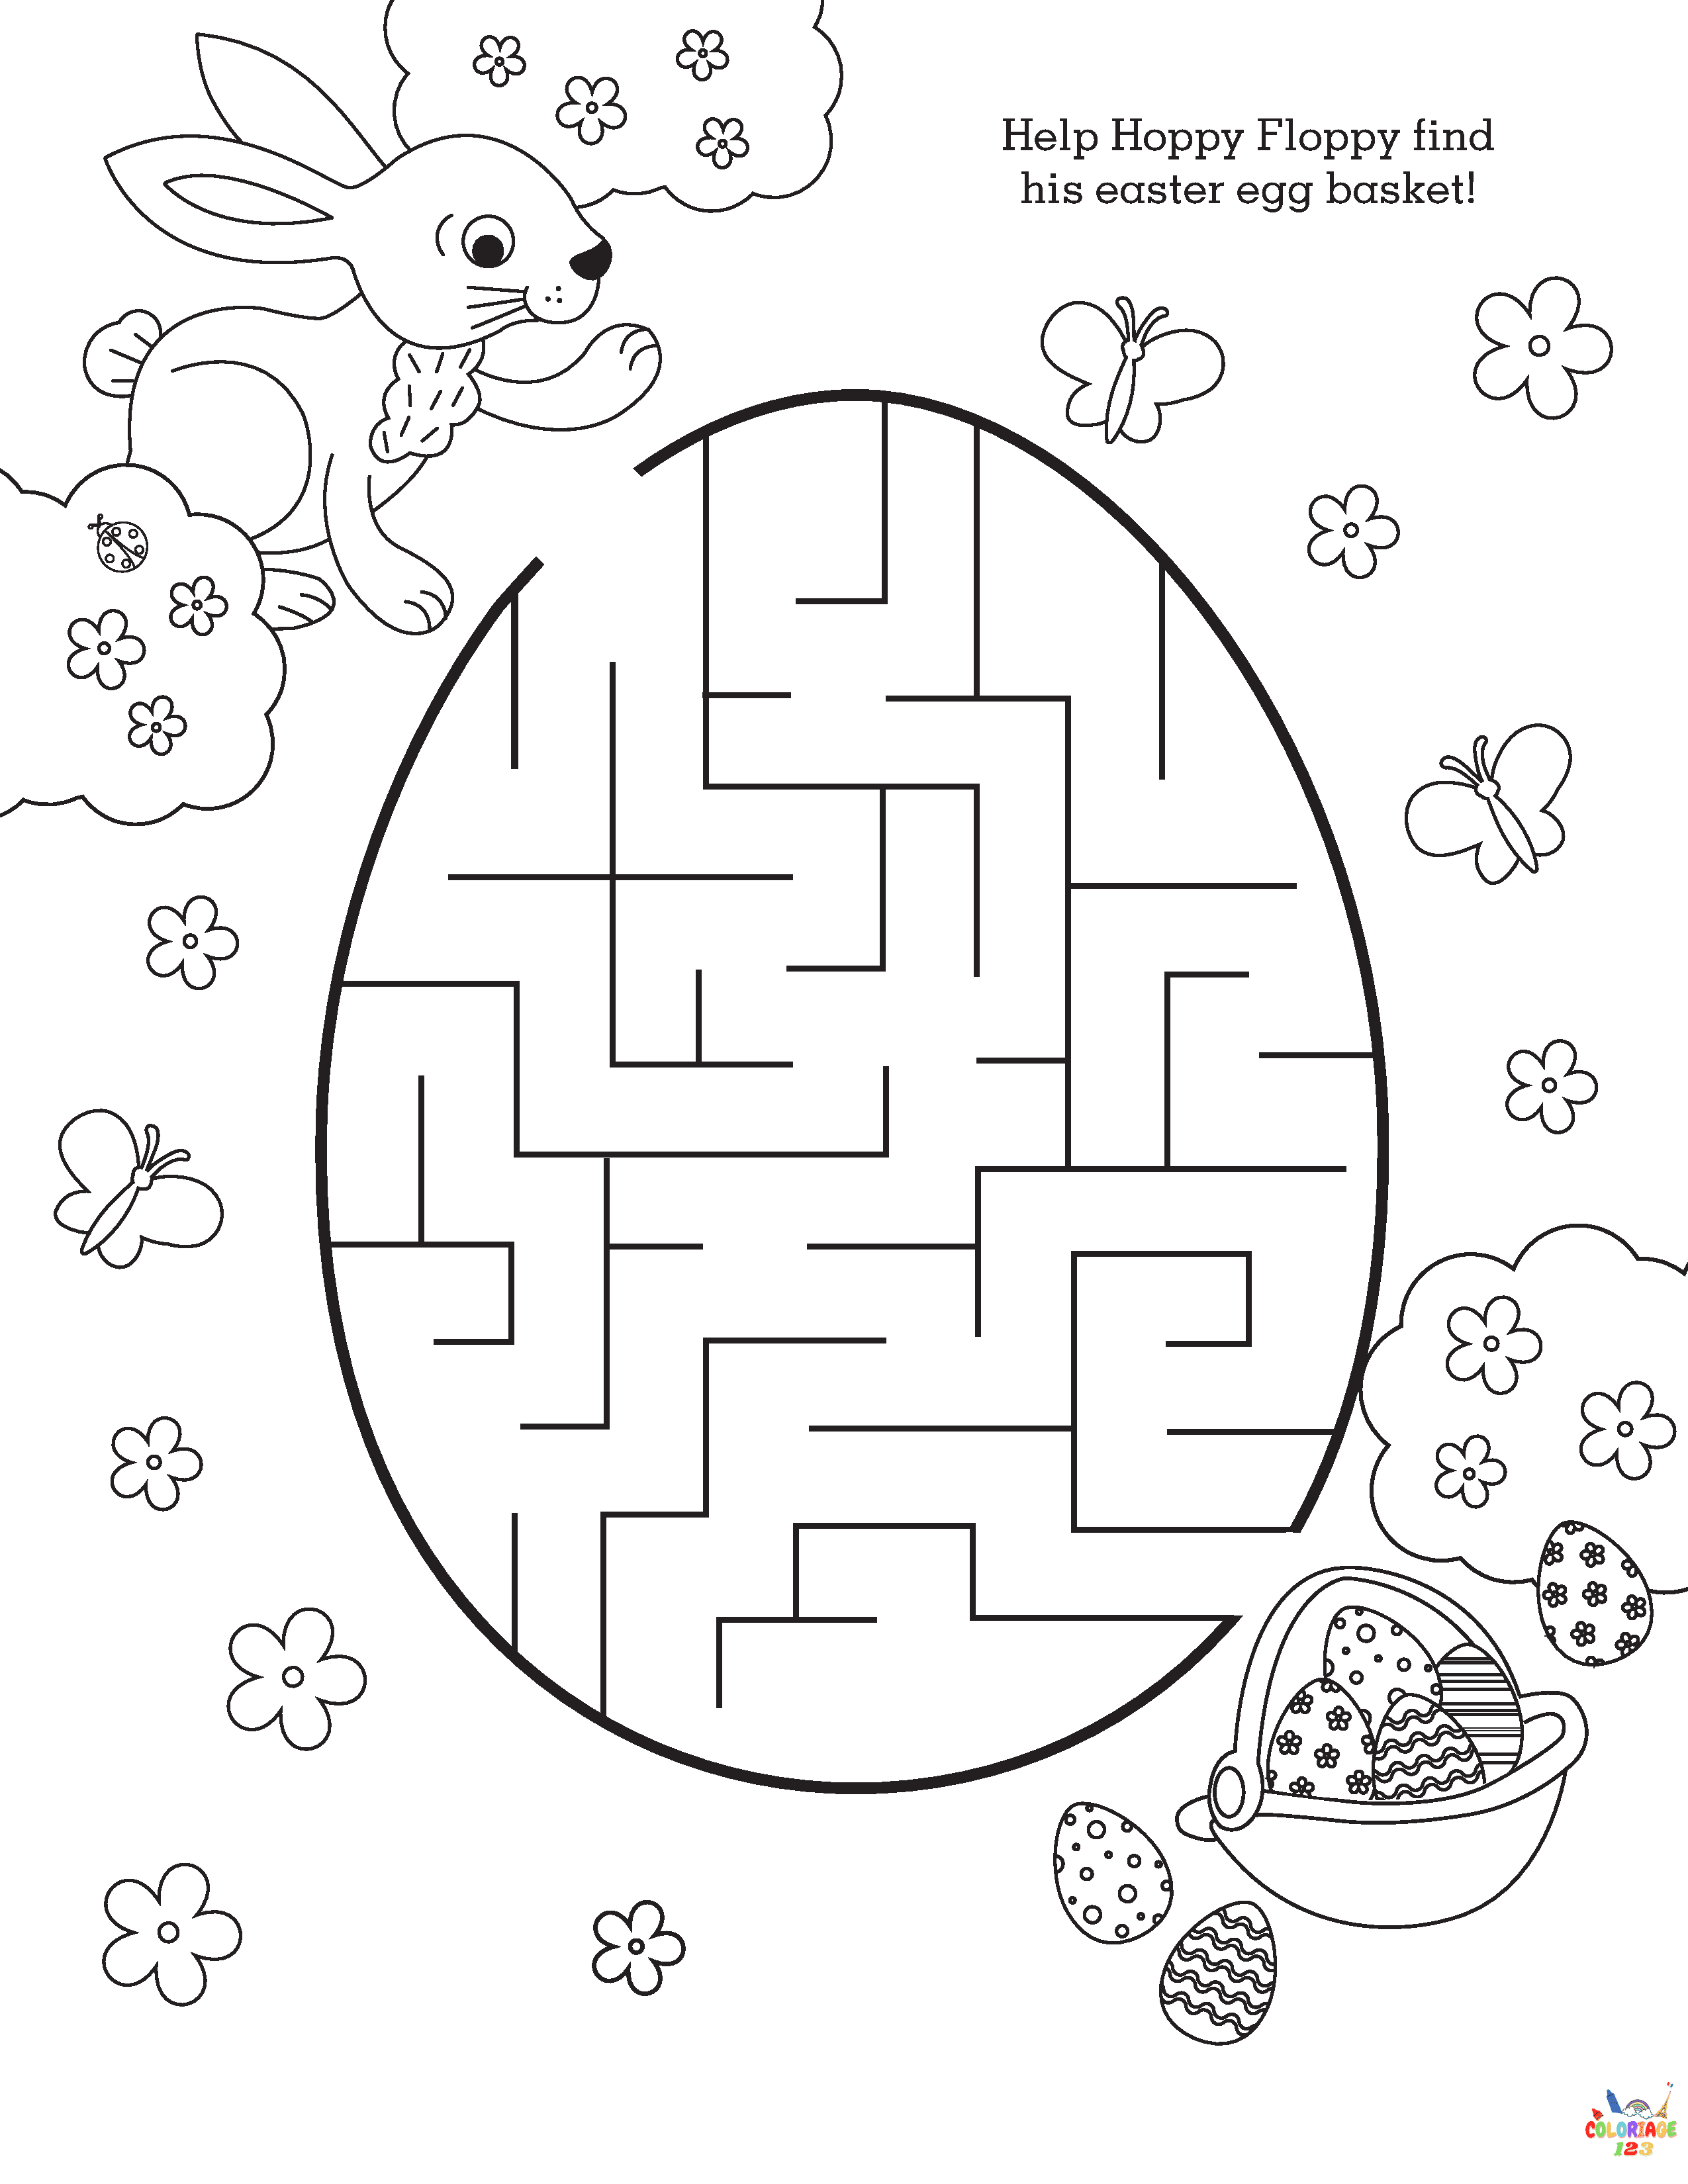 Labyrinthe (1)